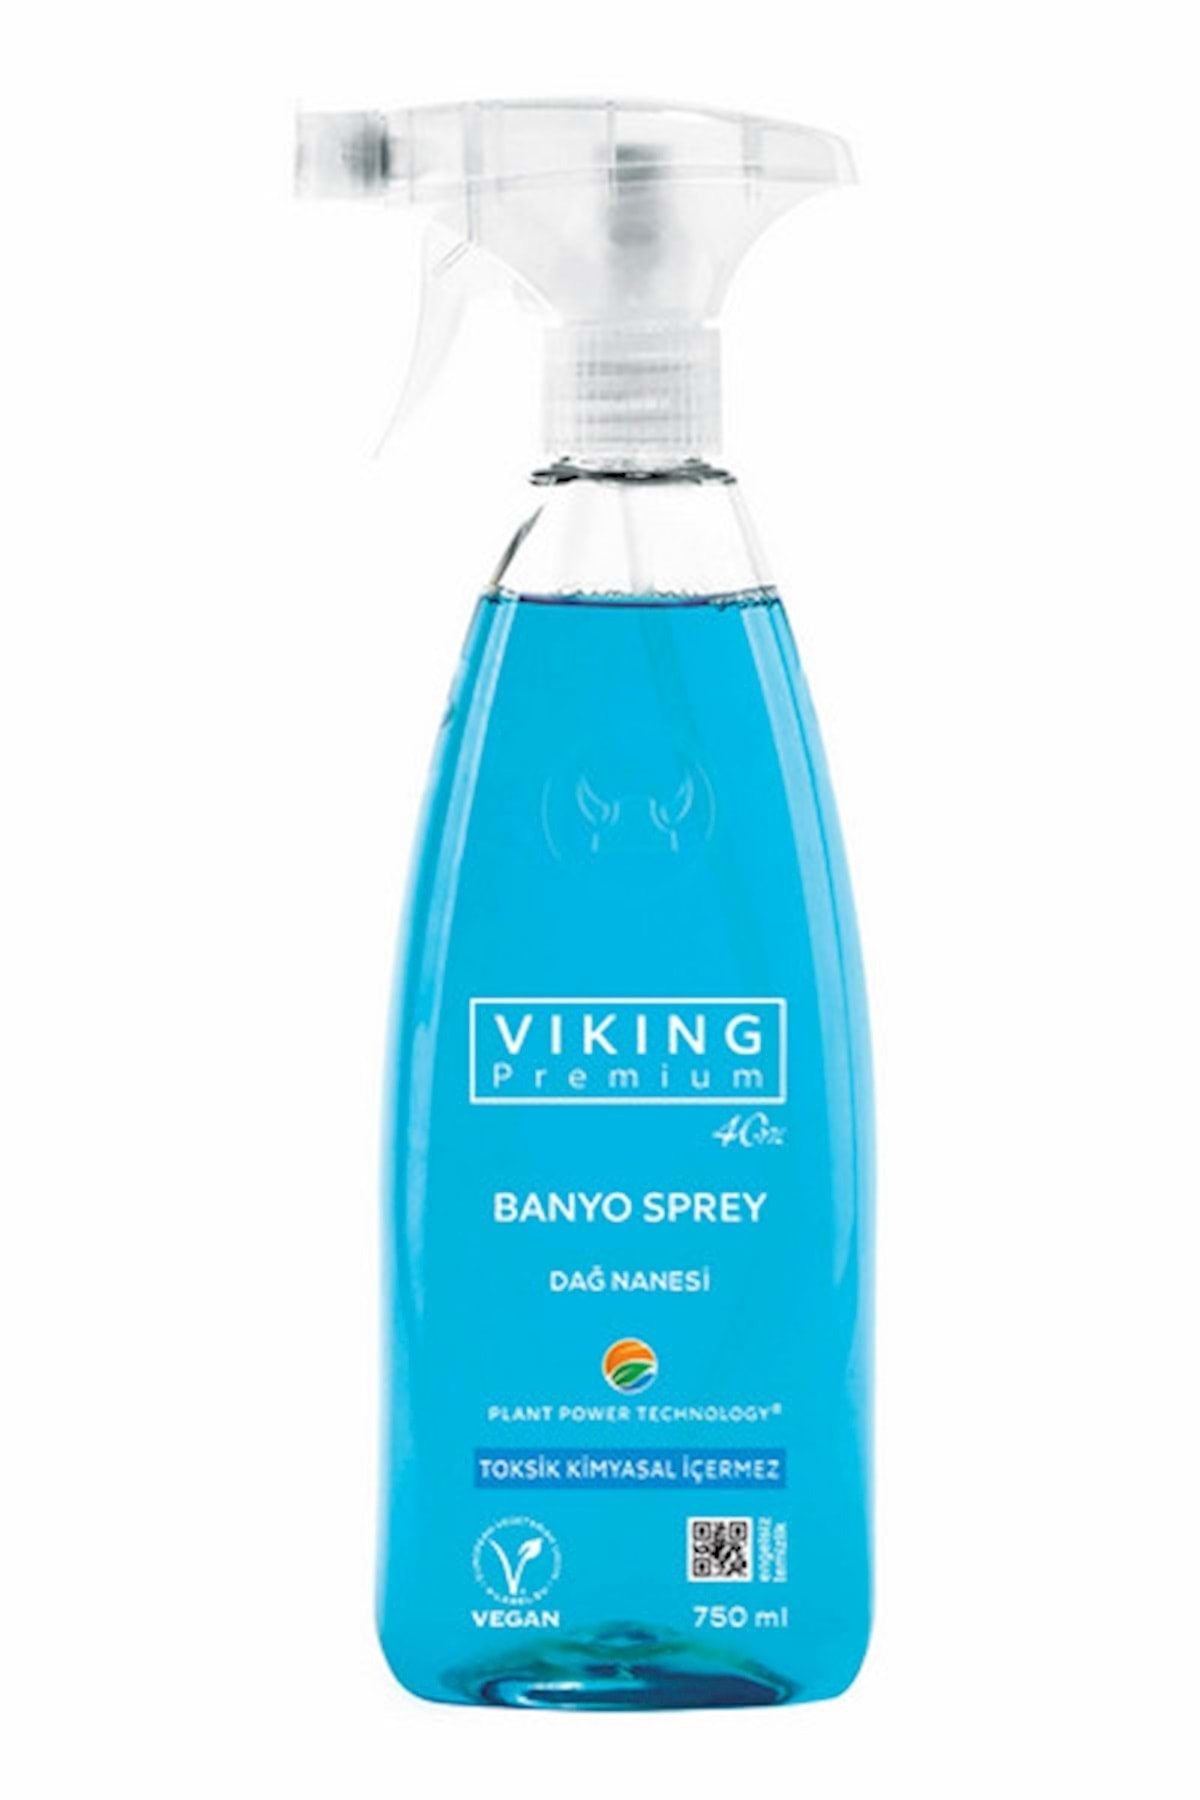 Viking Premium Banyo Sprey 750 Ml